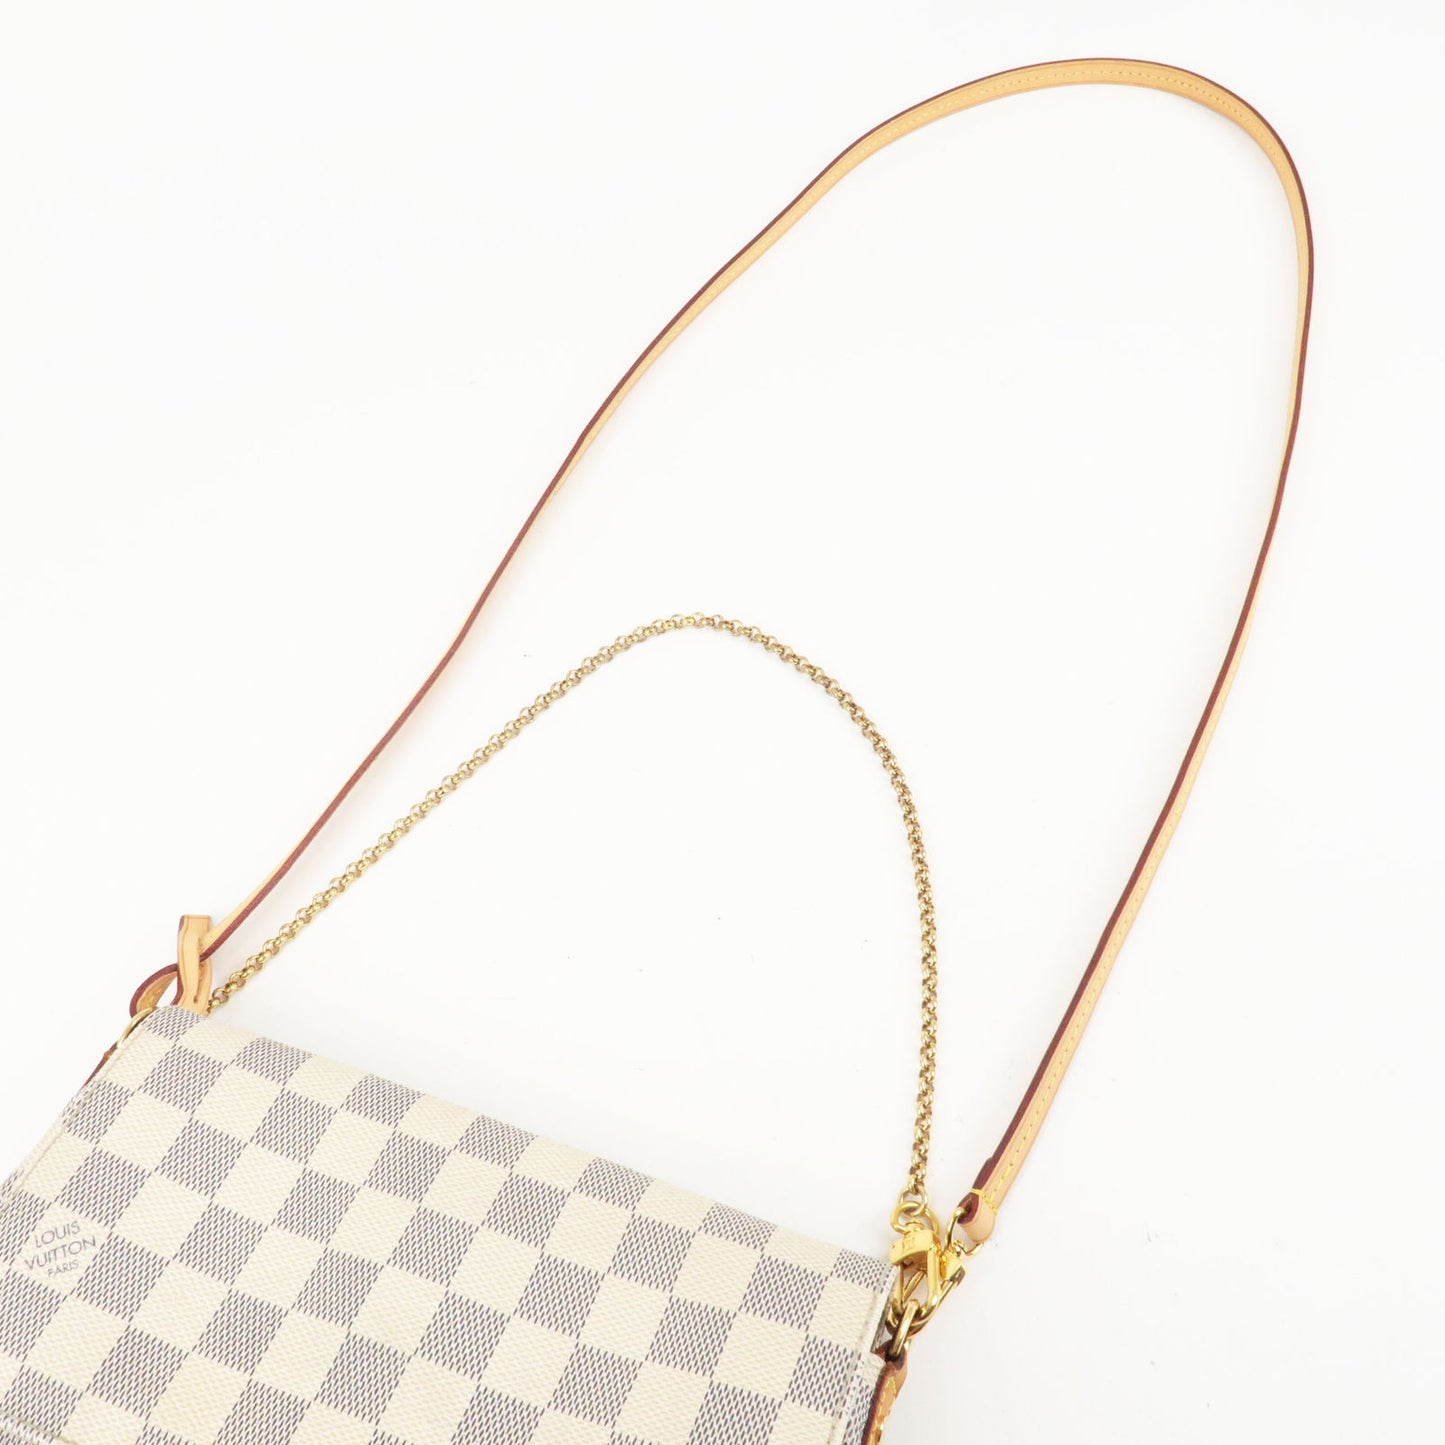 Louis-Vuitton-Damier-Azur-Favorite-PM-2Way-Shoulder-Bag-N41277